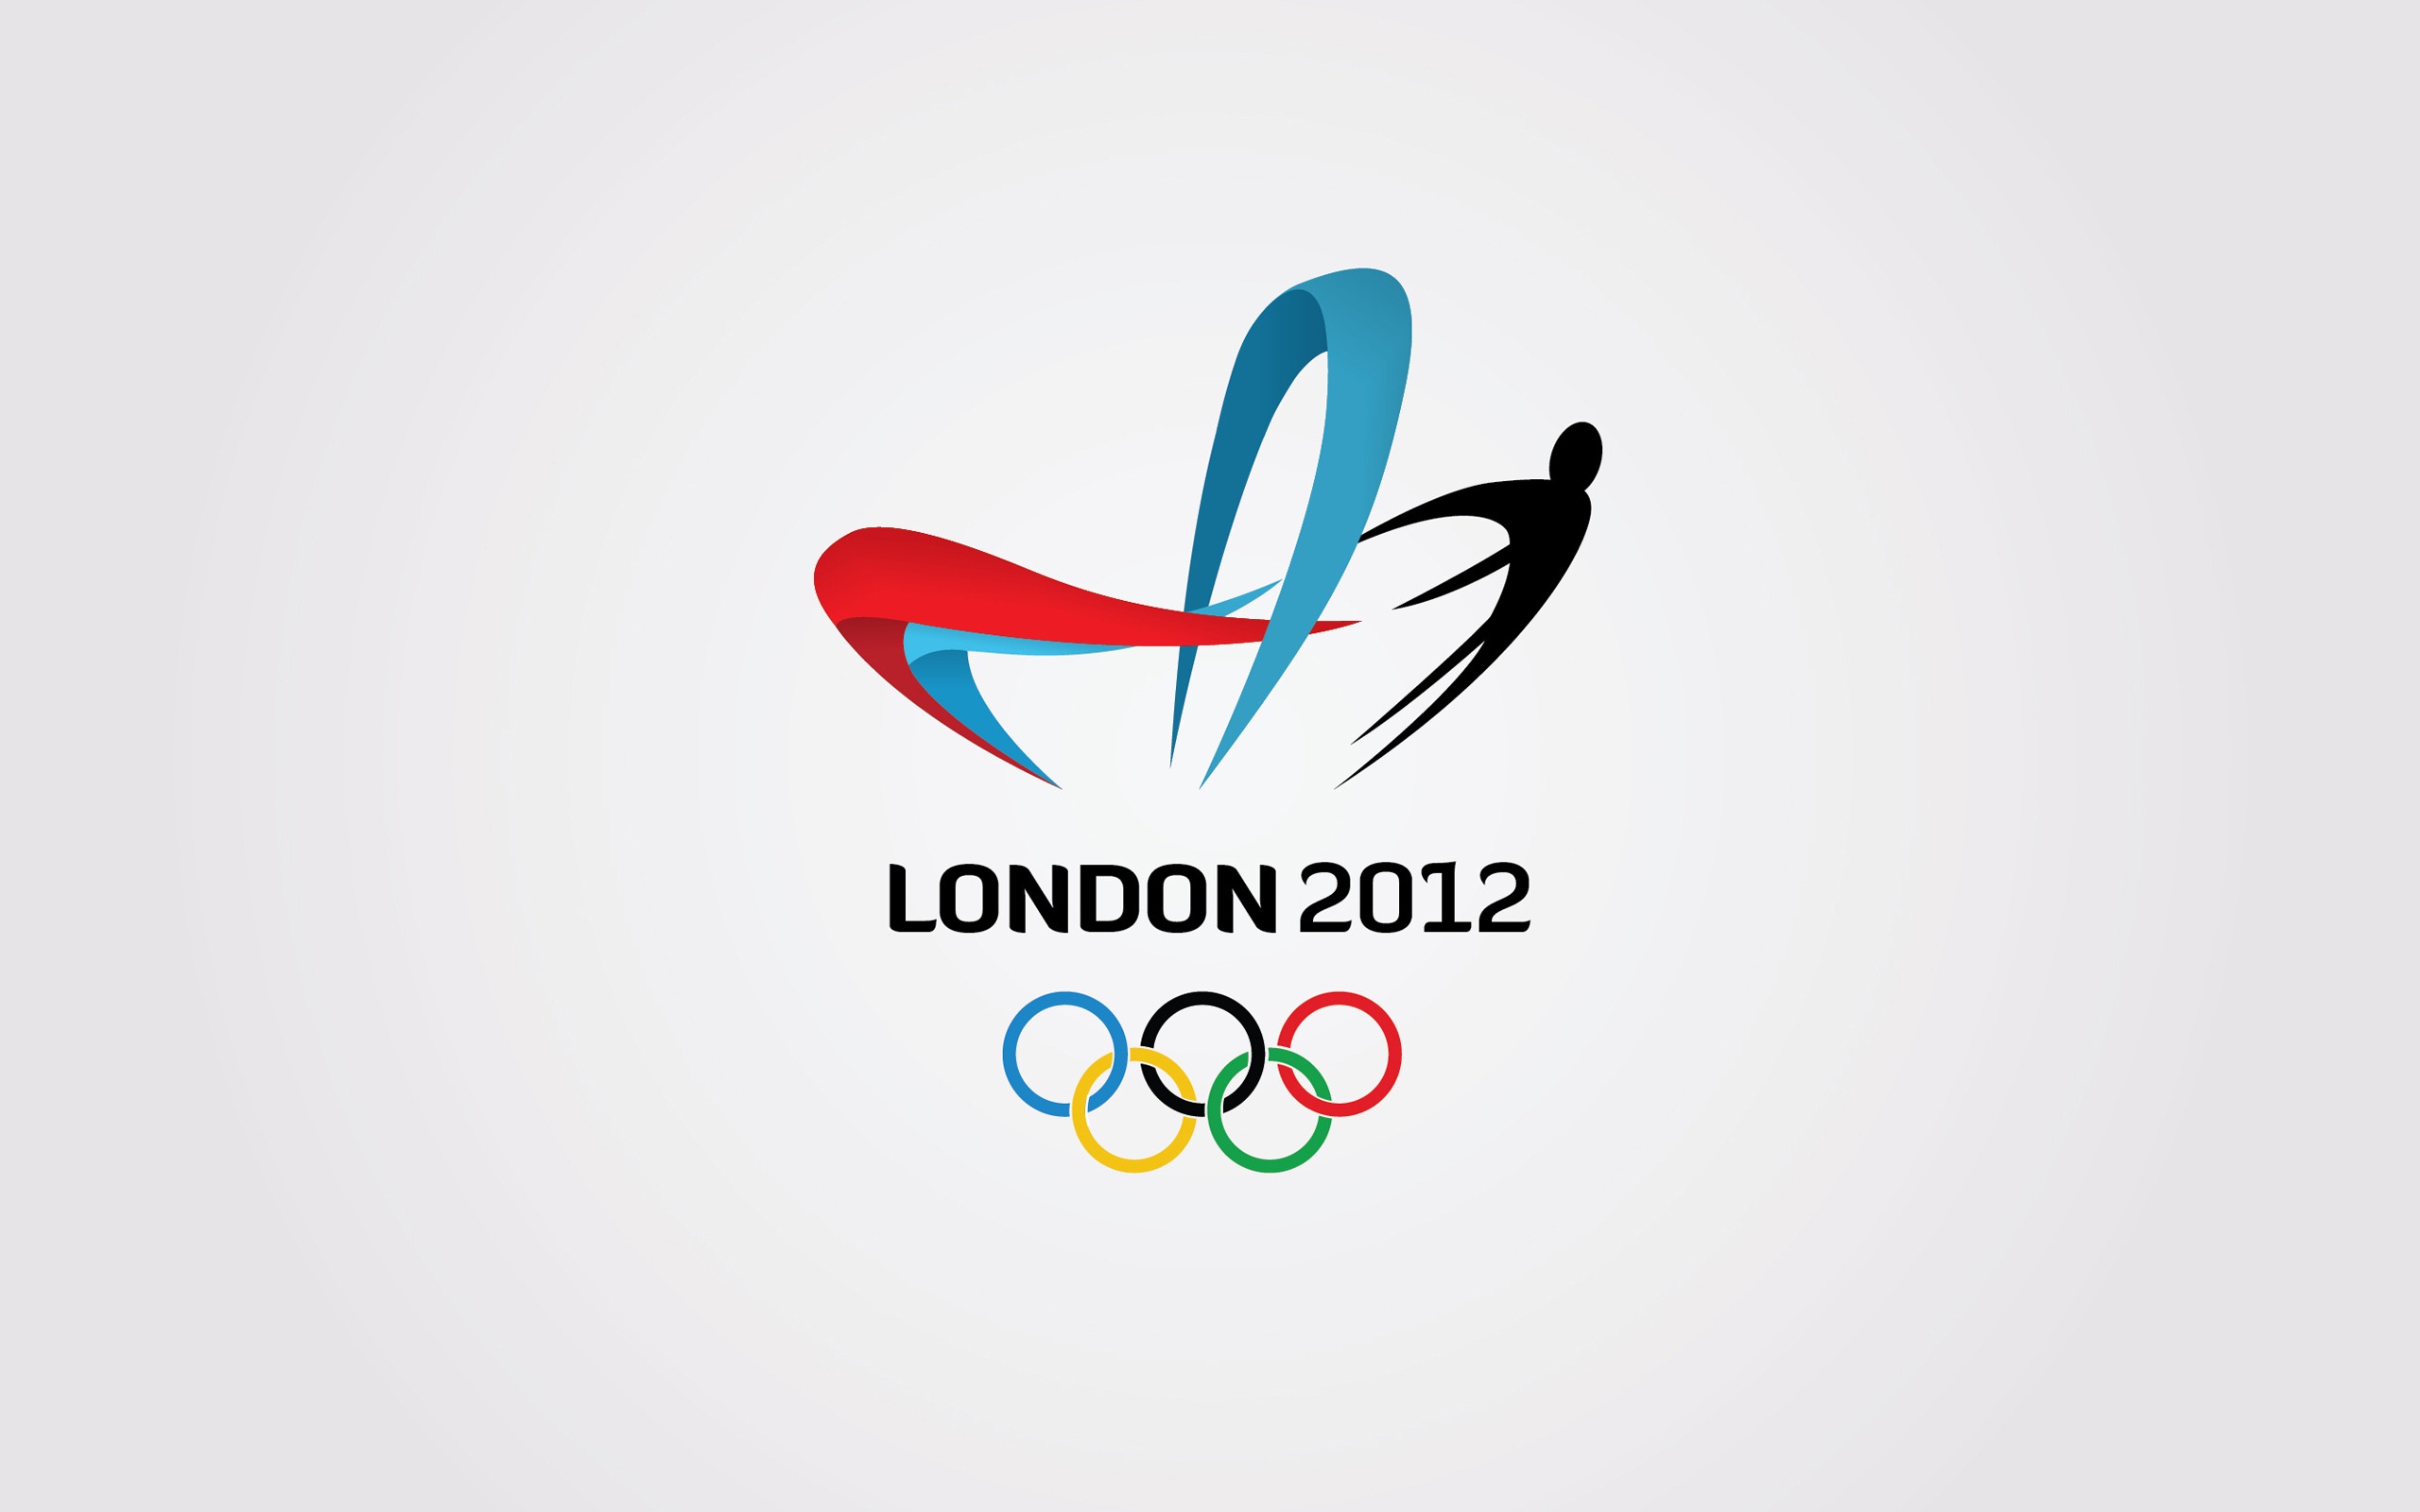 London 2012 Olympics theme wallpapers (2) #25 - 2560x1600